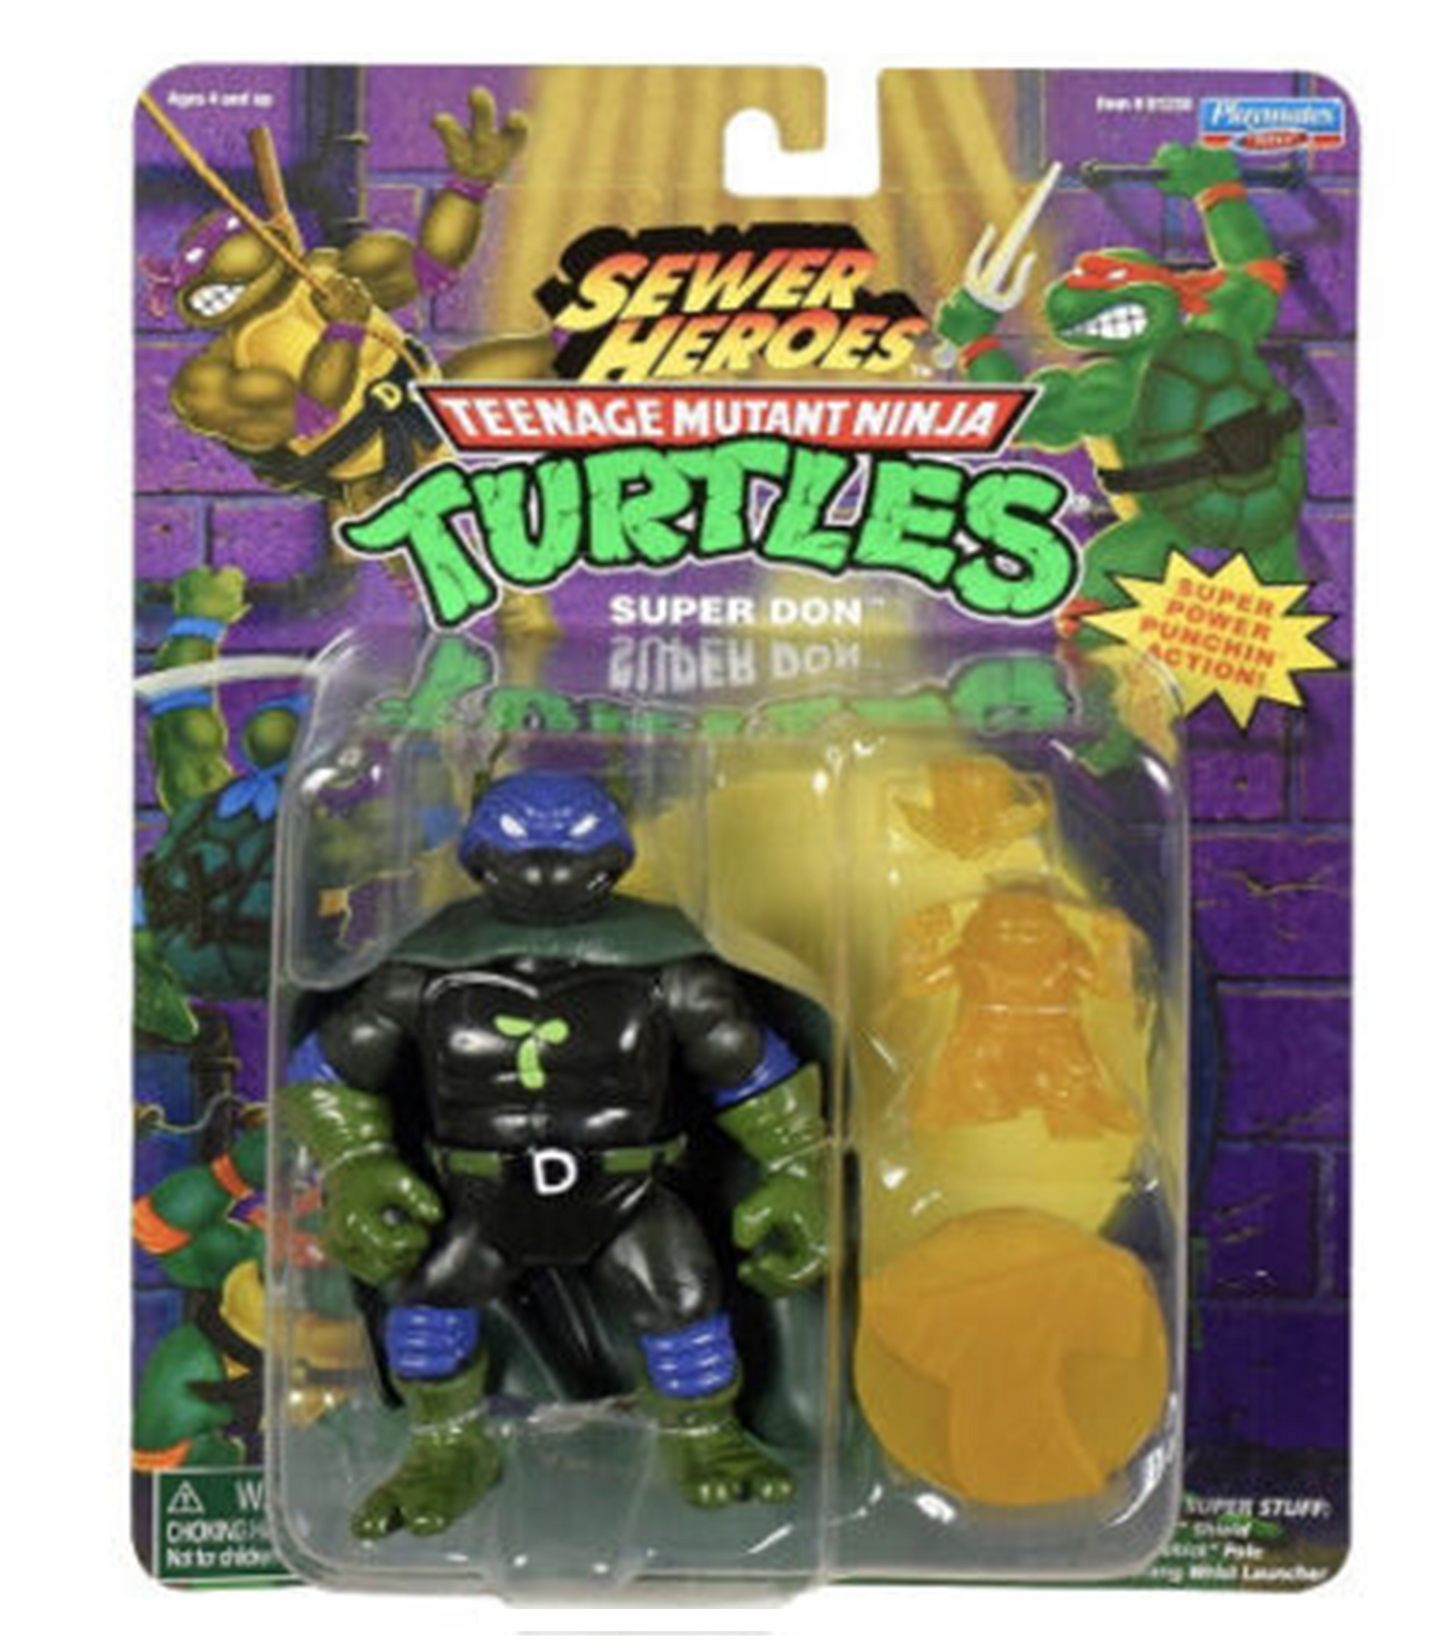 Teenage Mutant Ninja Turtles Sewer Heroes - Super Don Action Figure